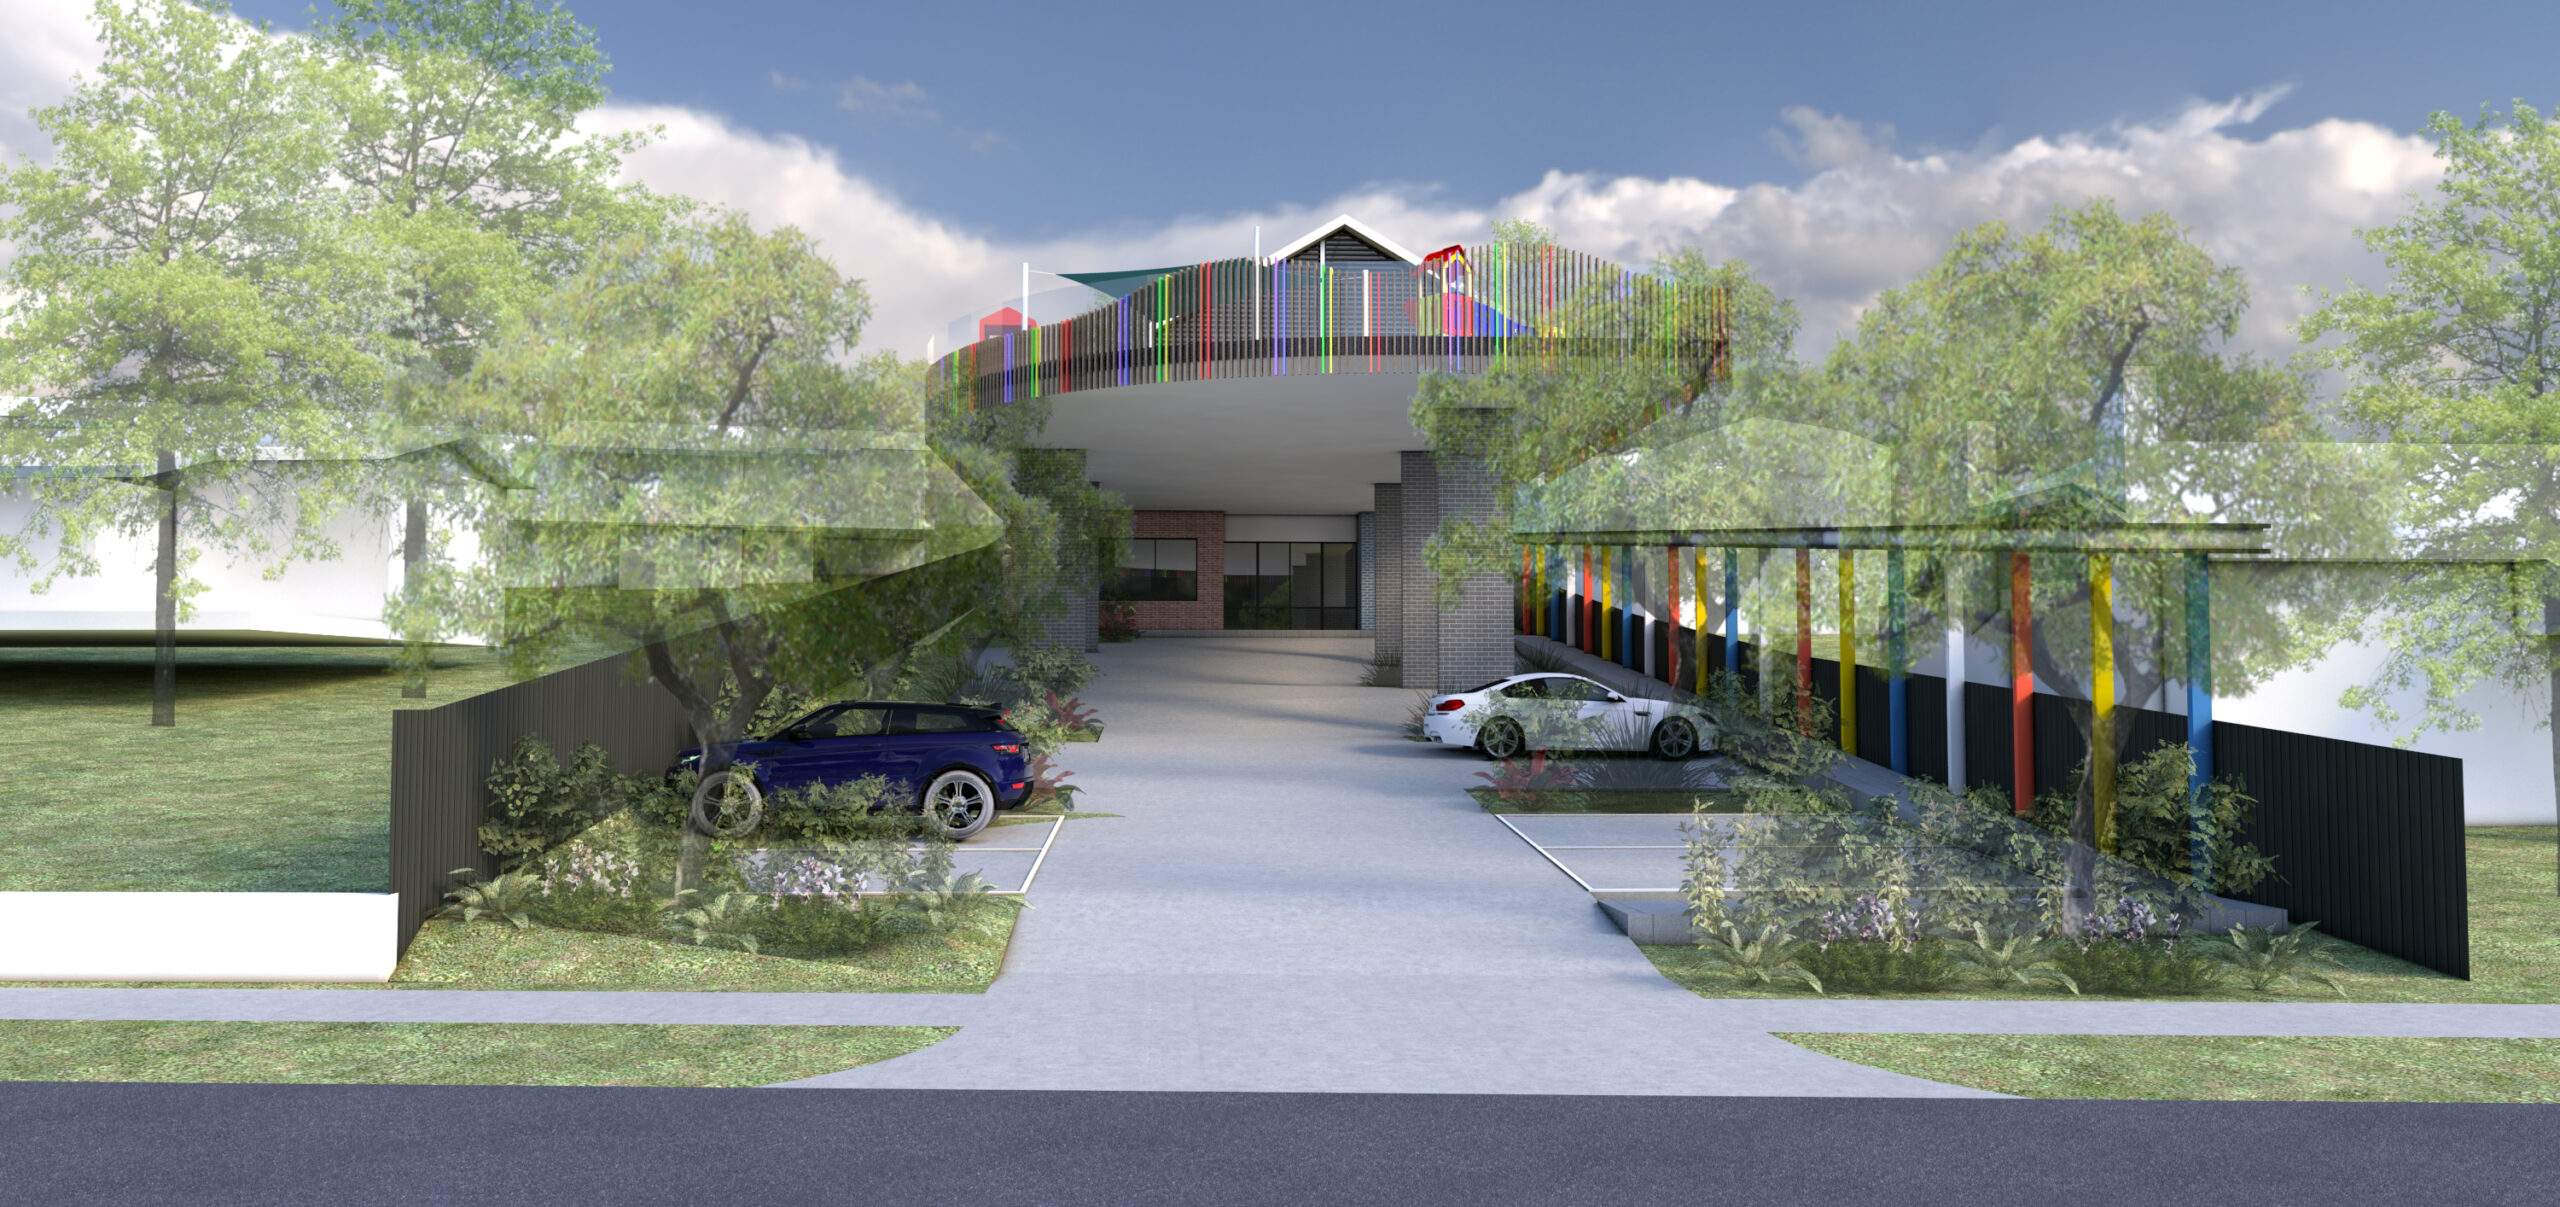 Main Road Eltham Childcare Centre - Petridis Architects